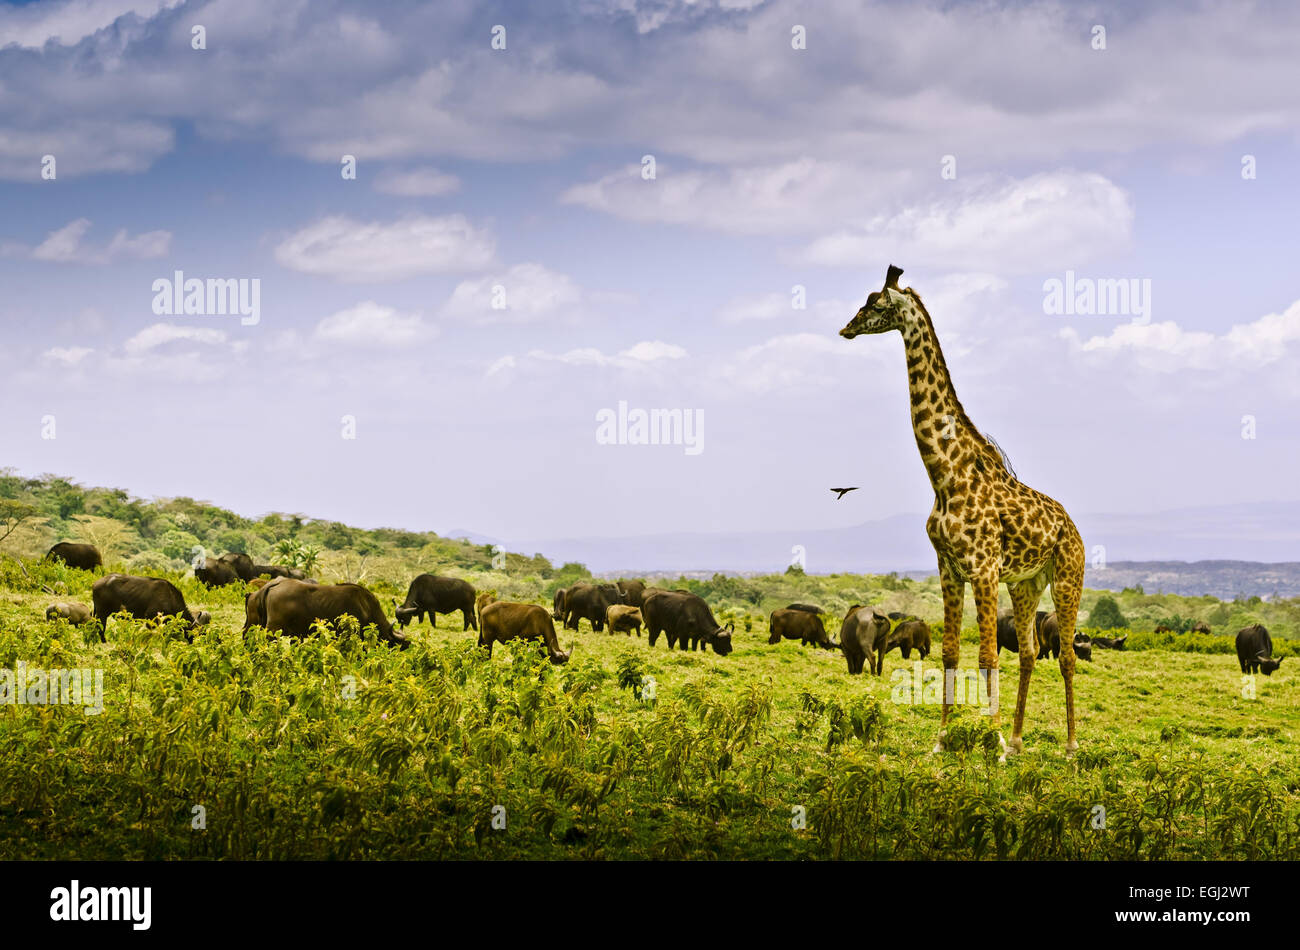 Africa, Tanzania, East Africa, Mt. Meru, Arusha national park, buffalo, giraffe, Stock Photo